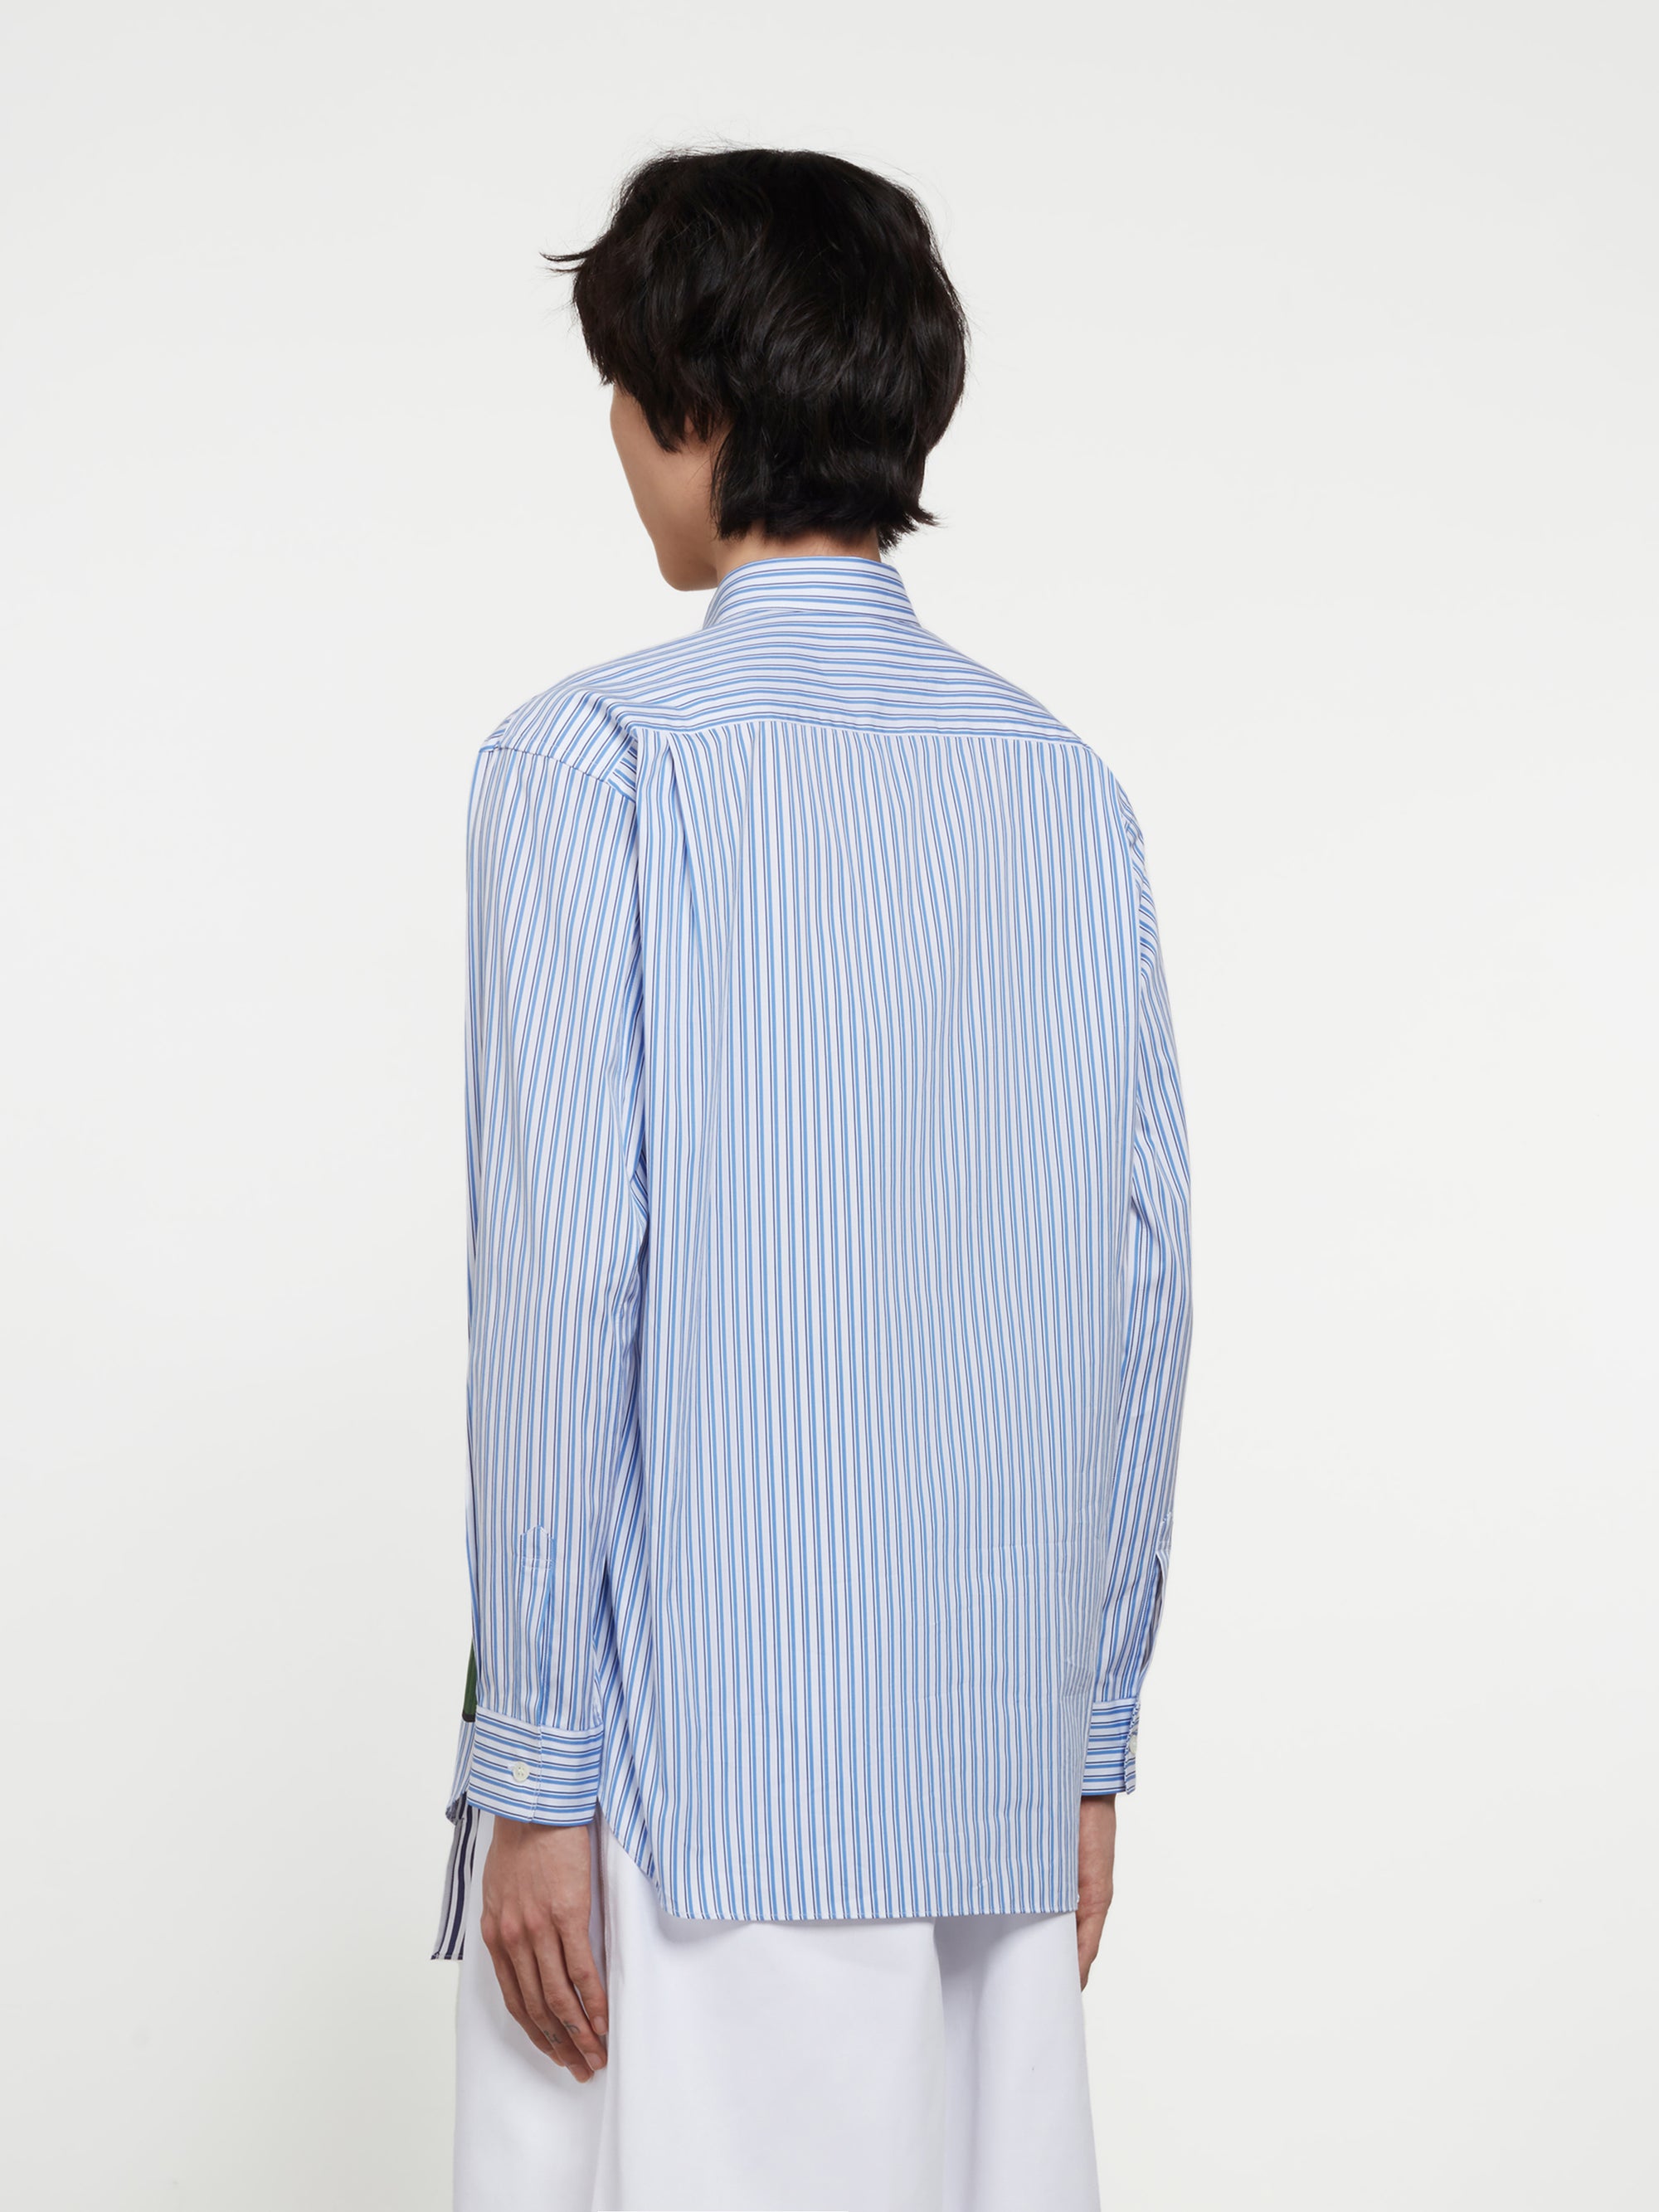 CDG Shirt - Lacoste Men's Cotton Check Shirt - (A-1 Print) view 3